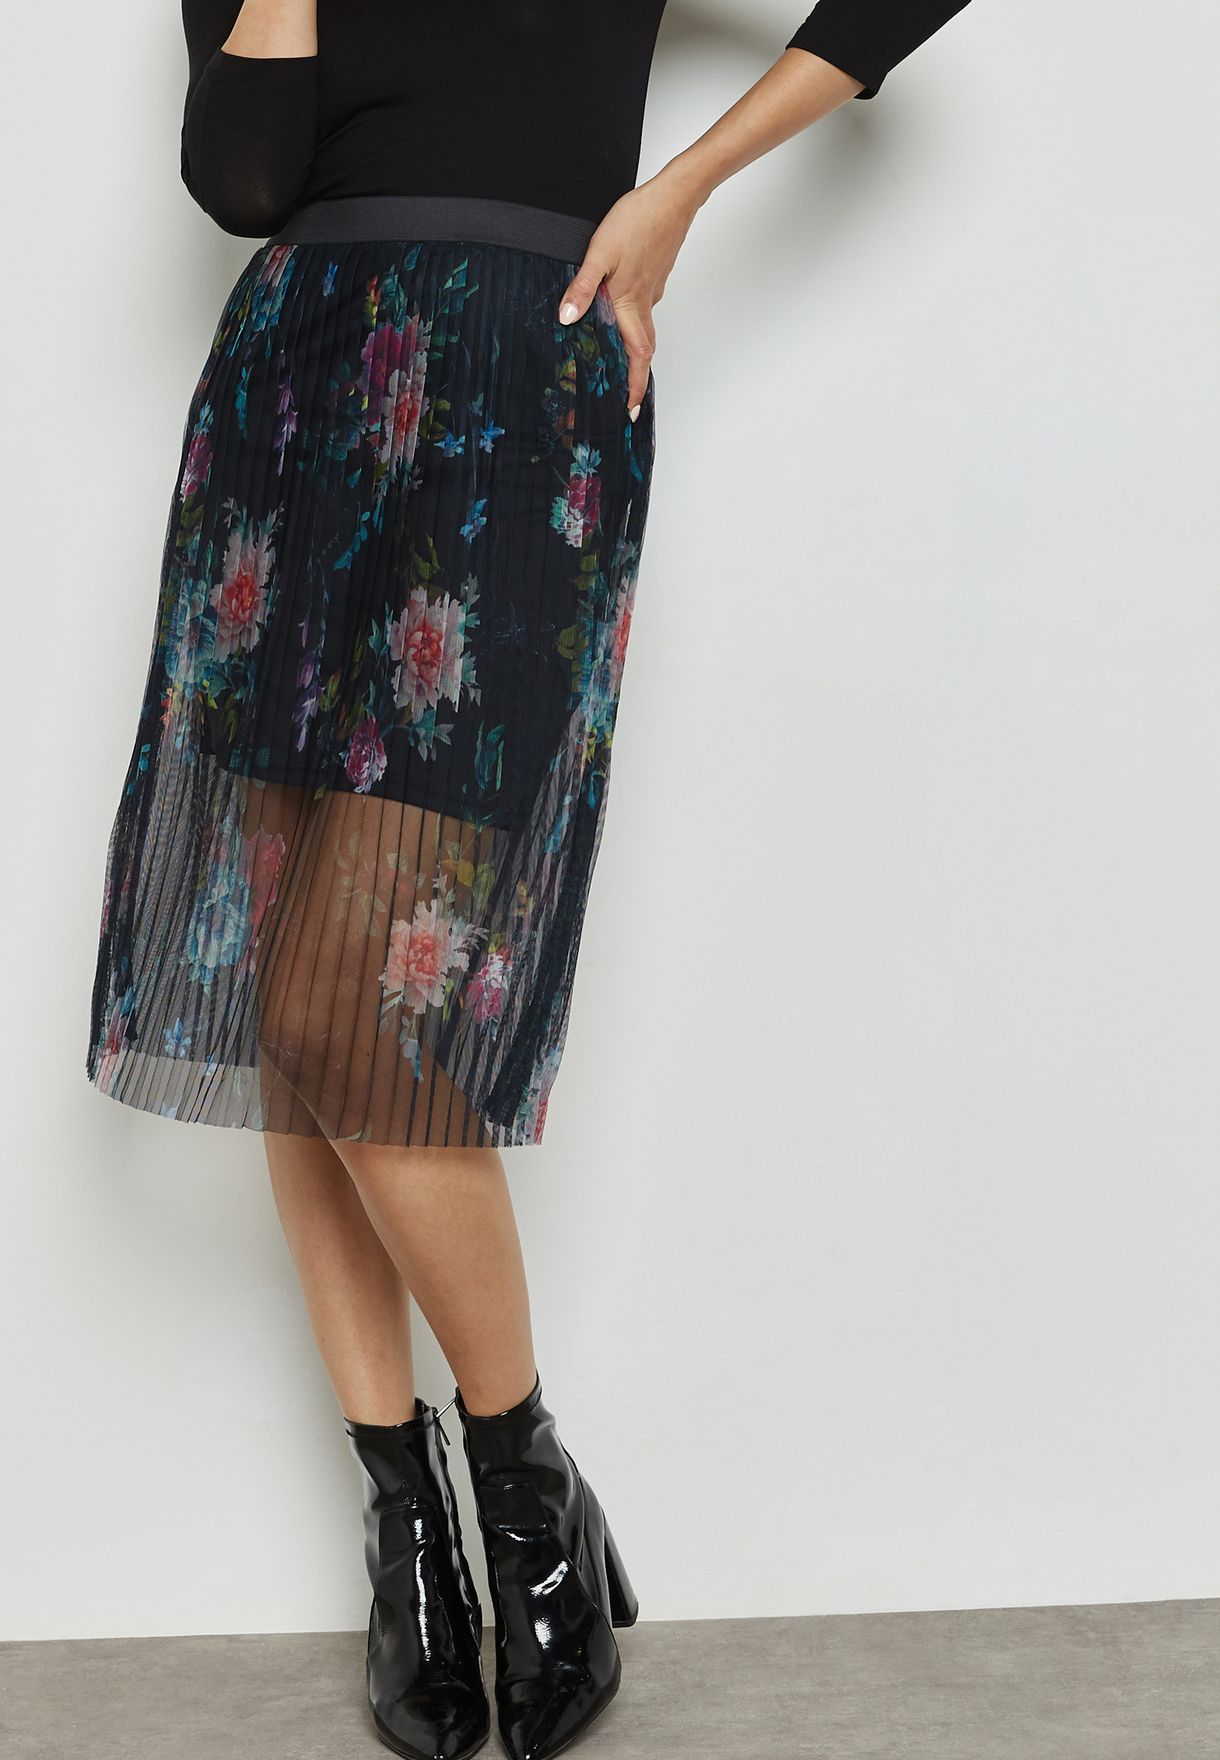 sheer embroidered skirt